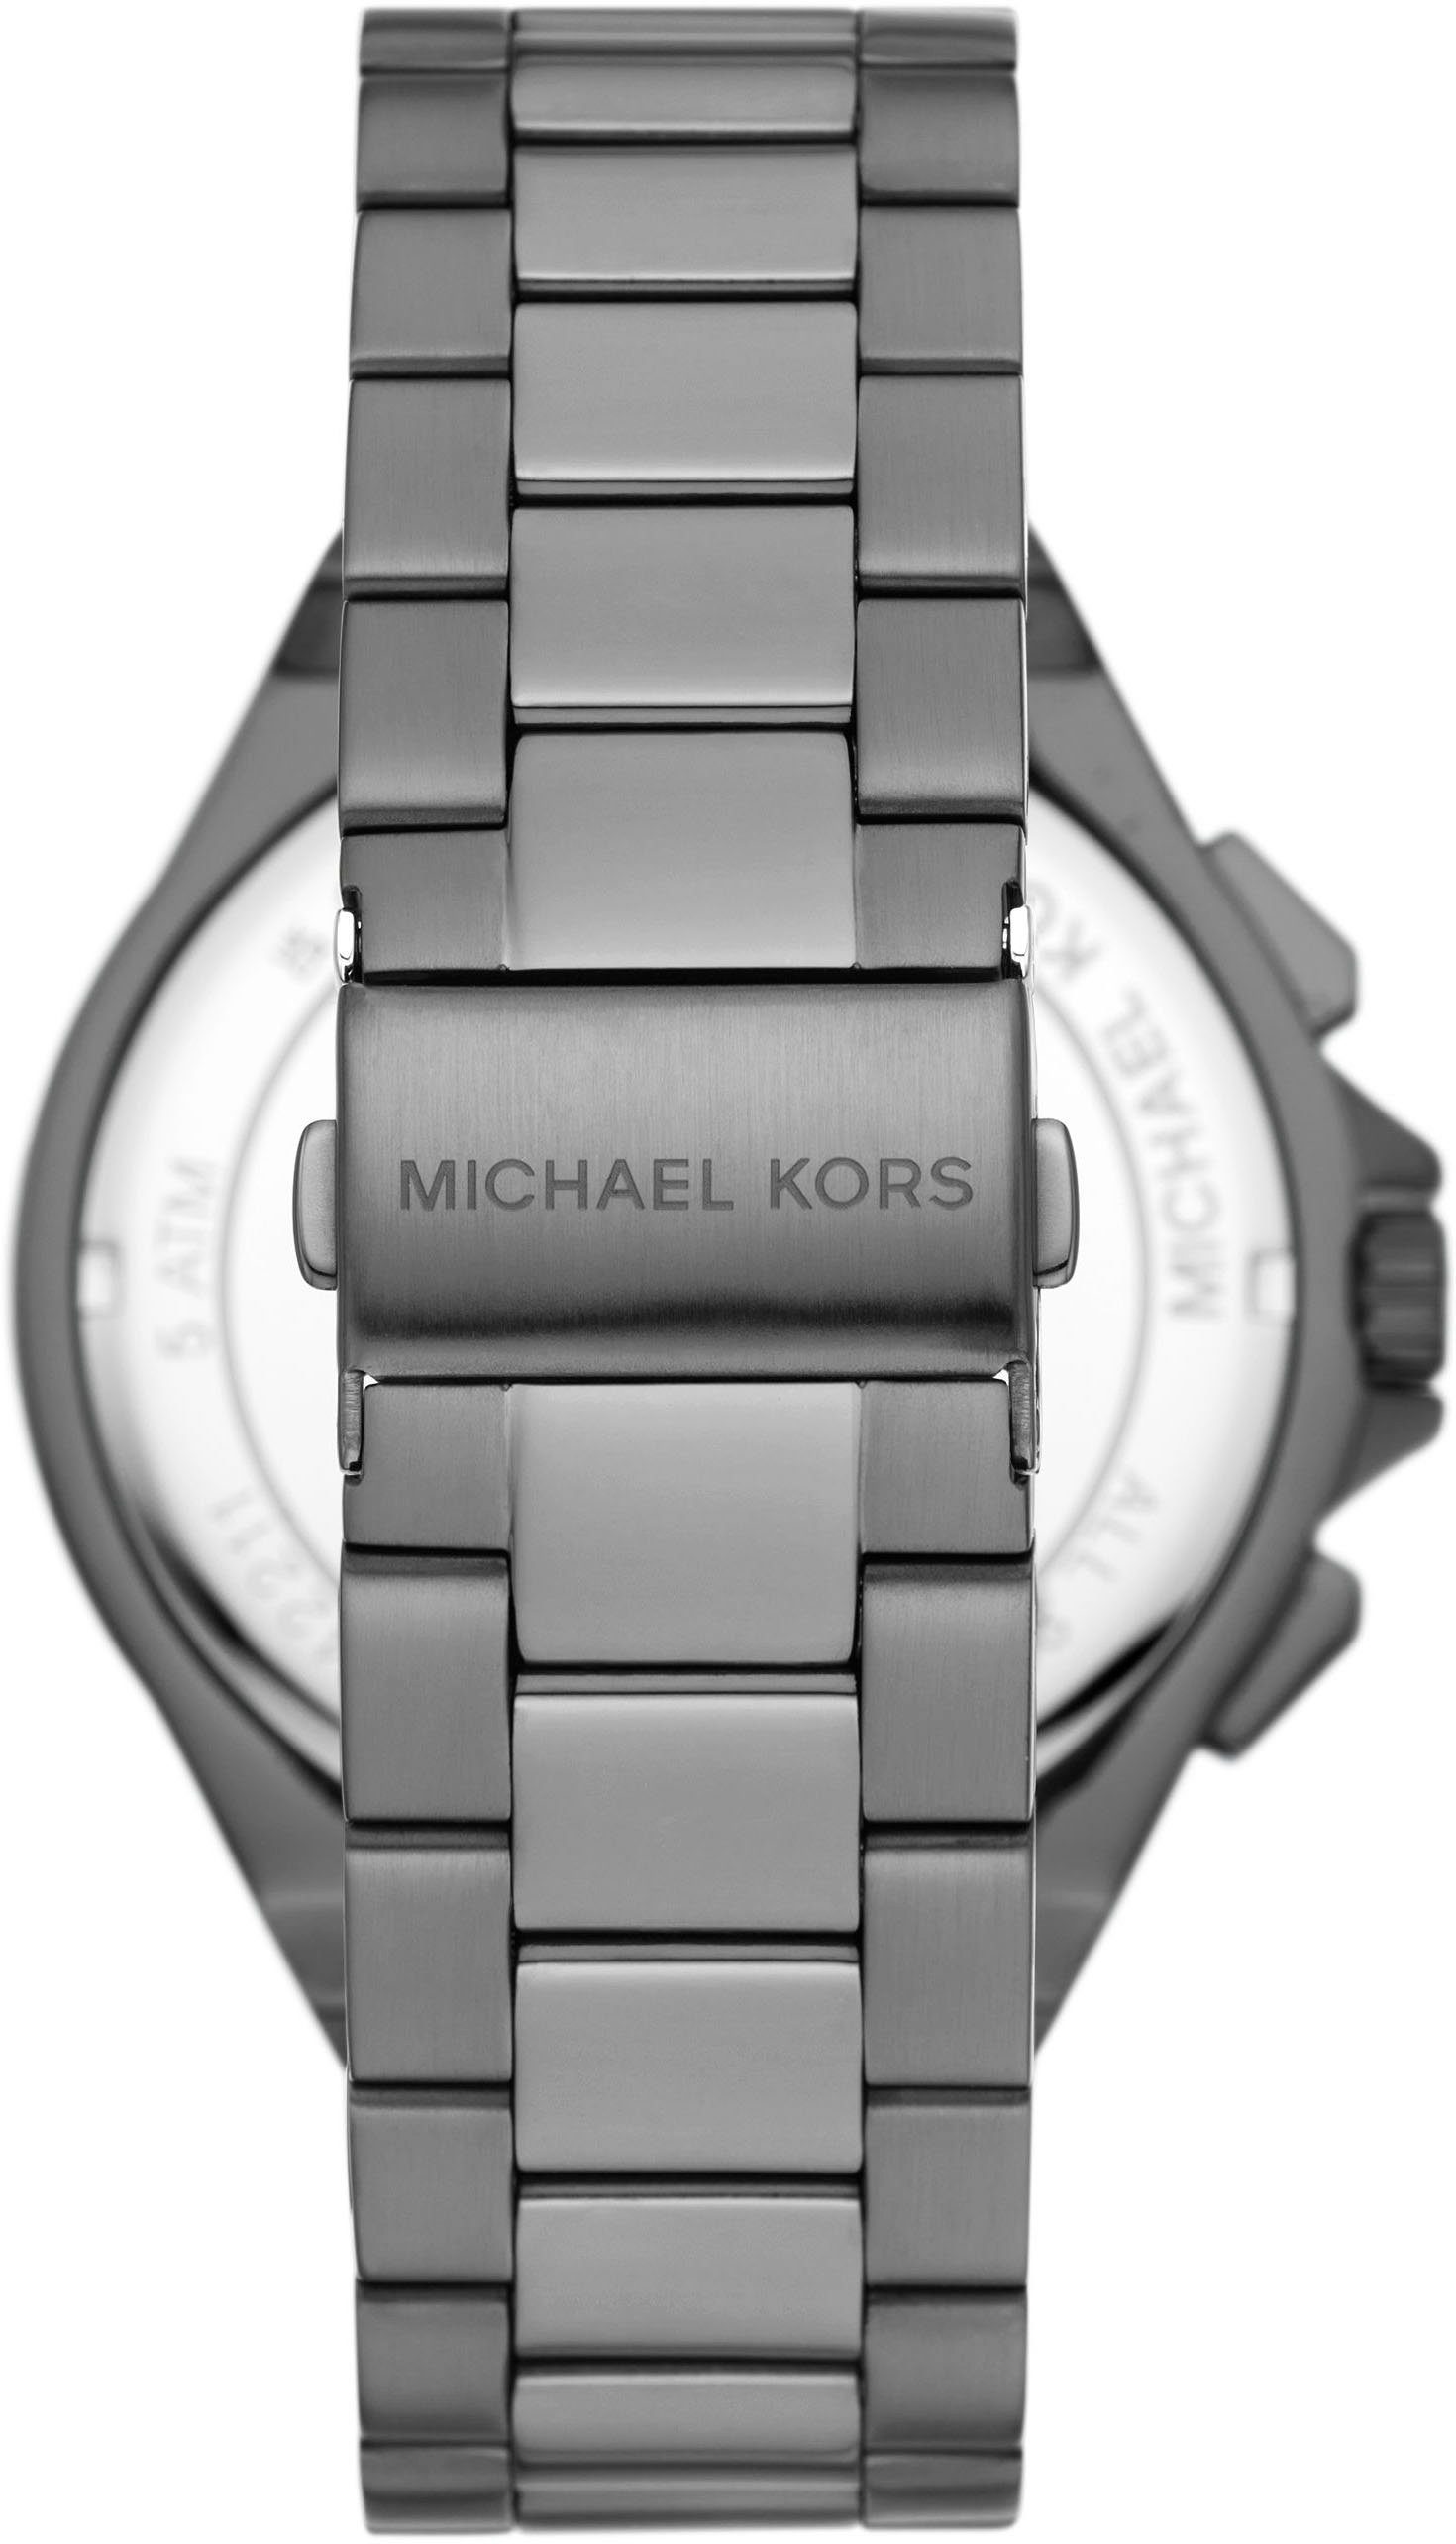 Chronograph KORS LENNOX, MK9102 MICHAEL